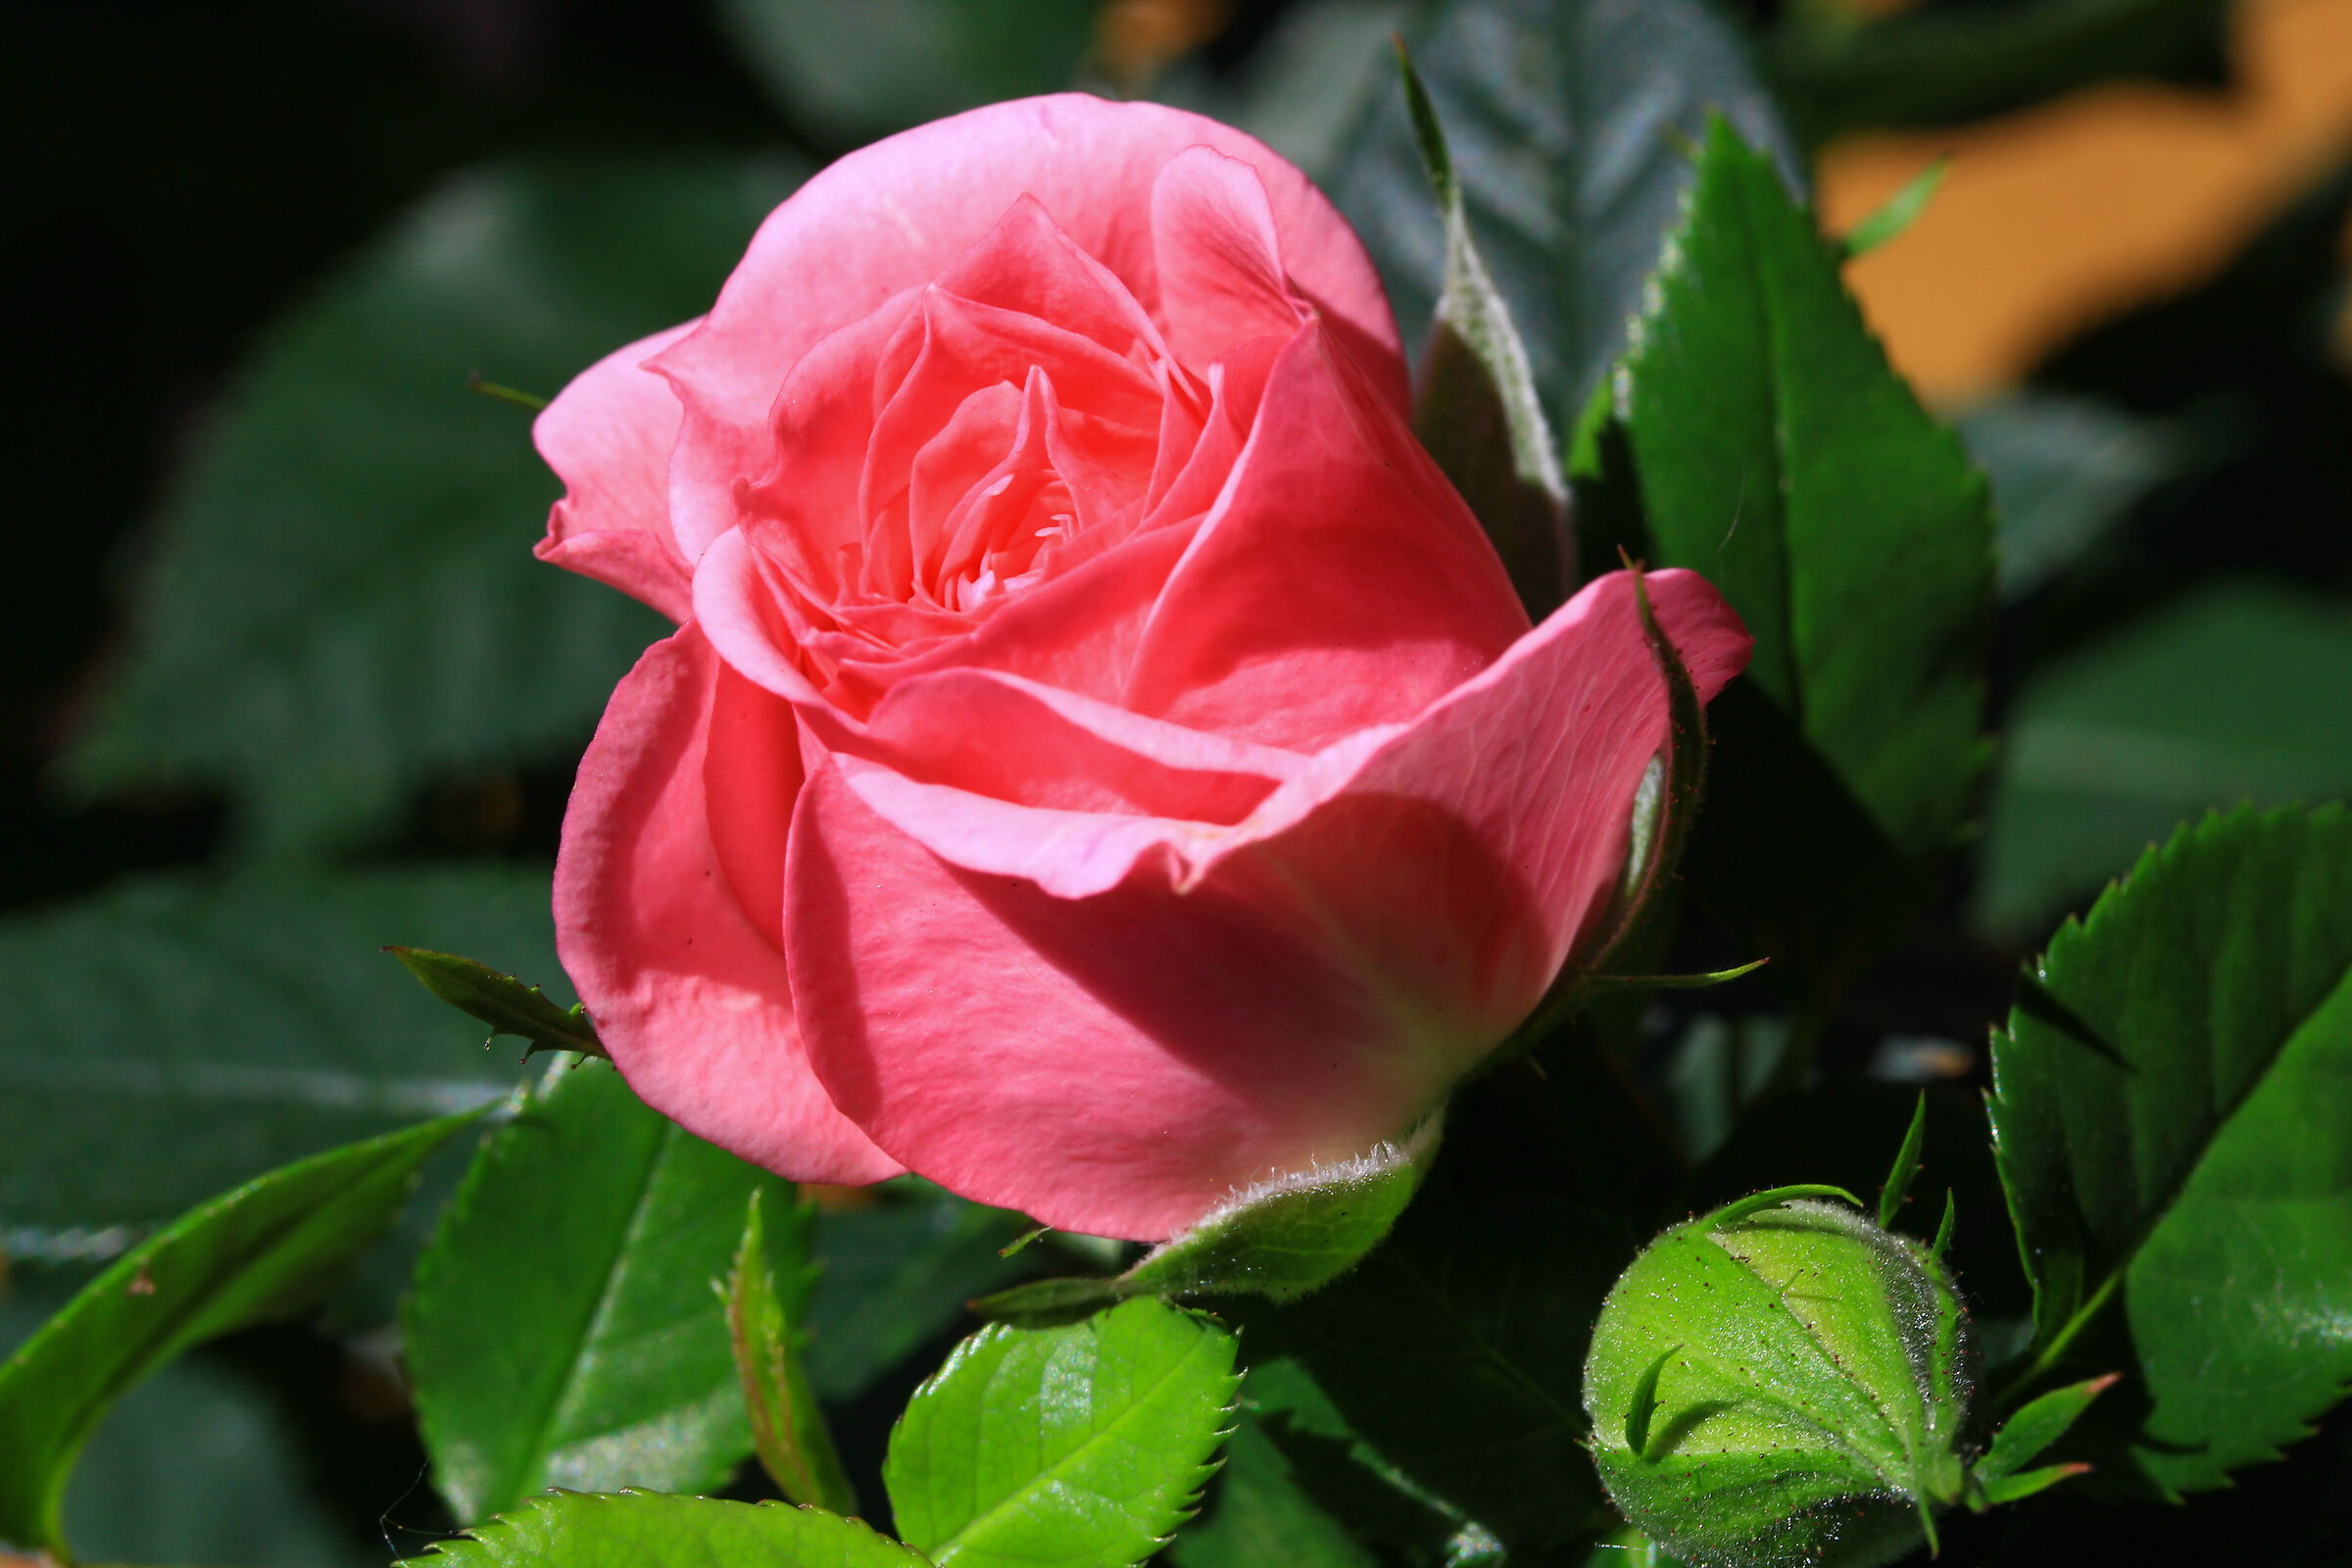 A simple Rose...